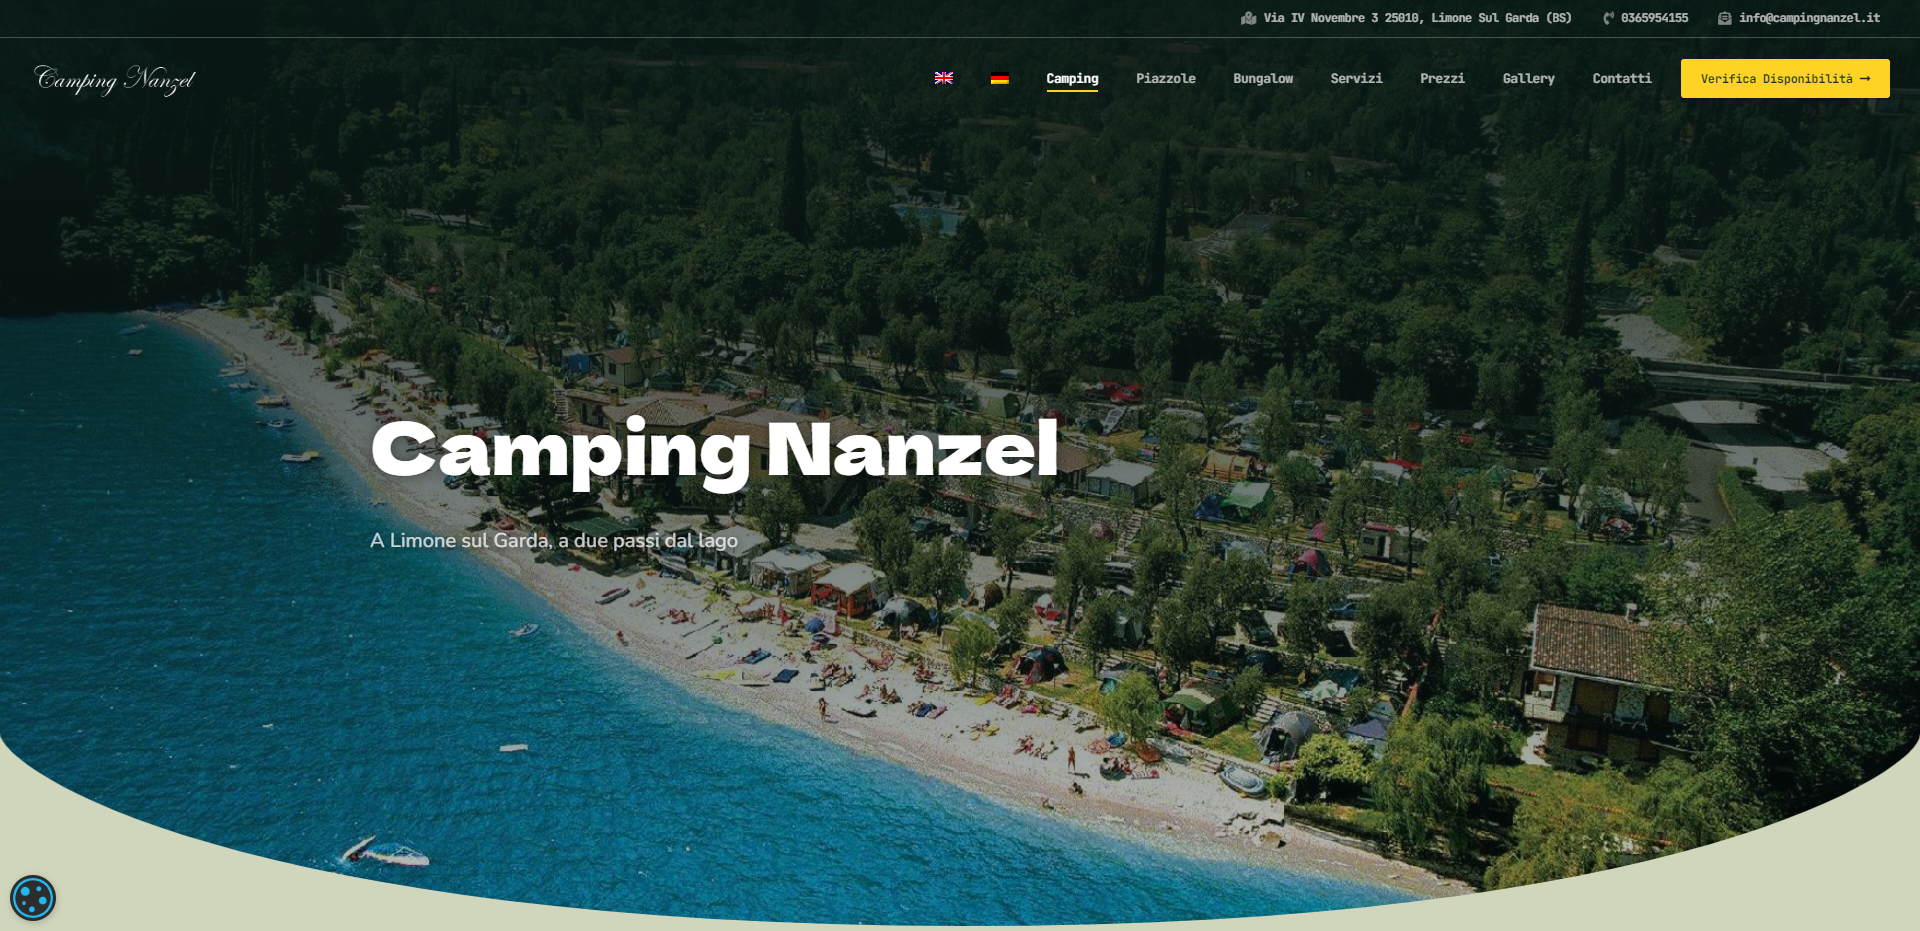 Camping Nanzel